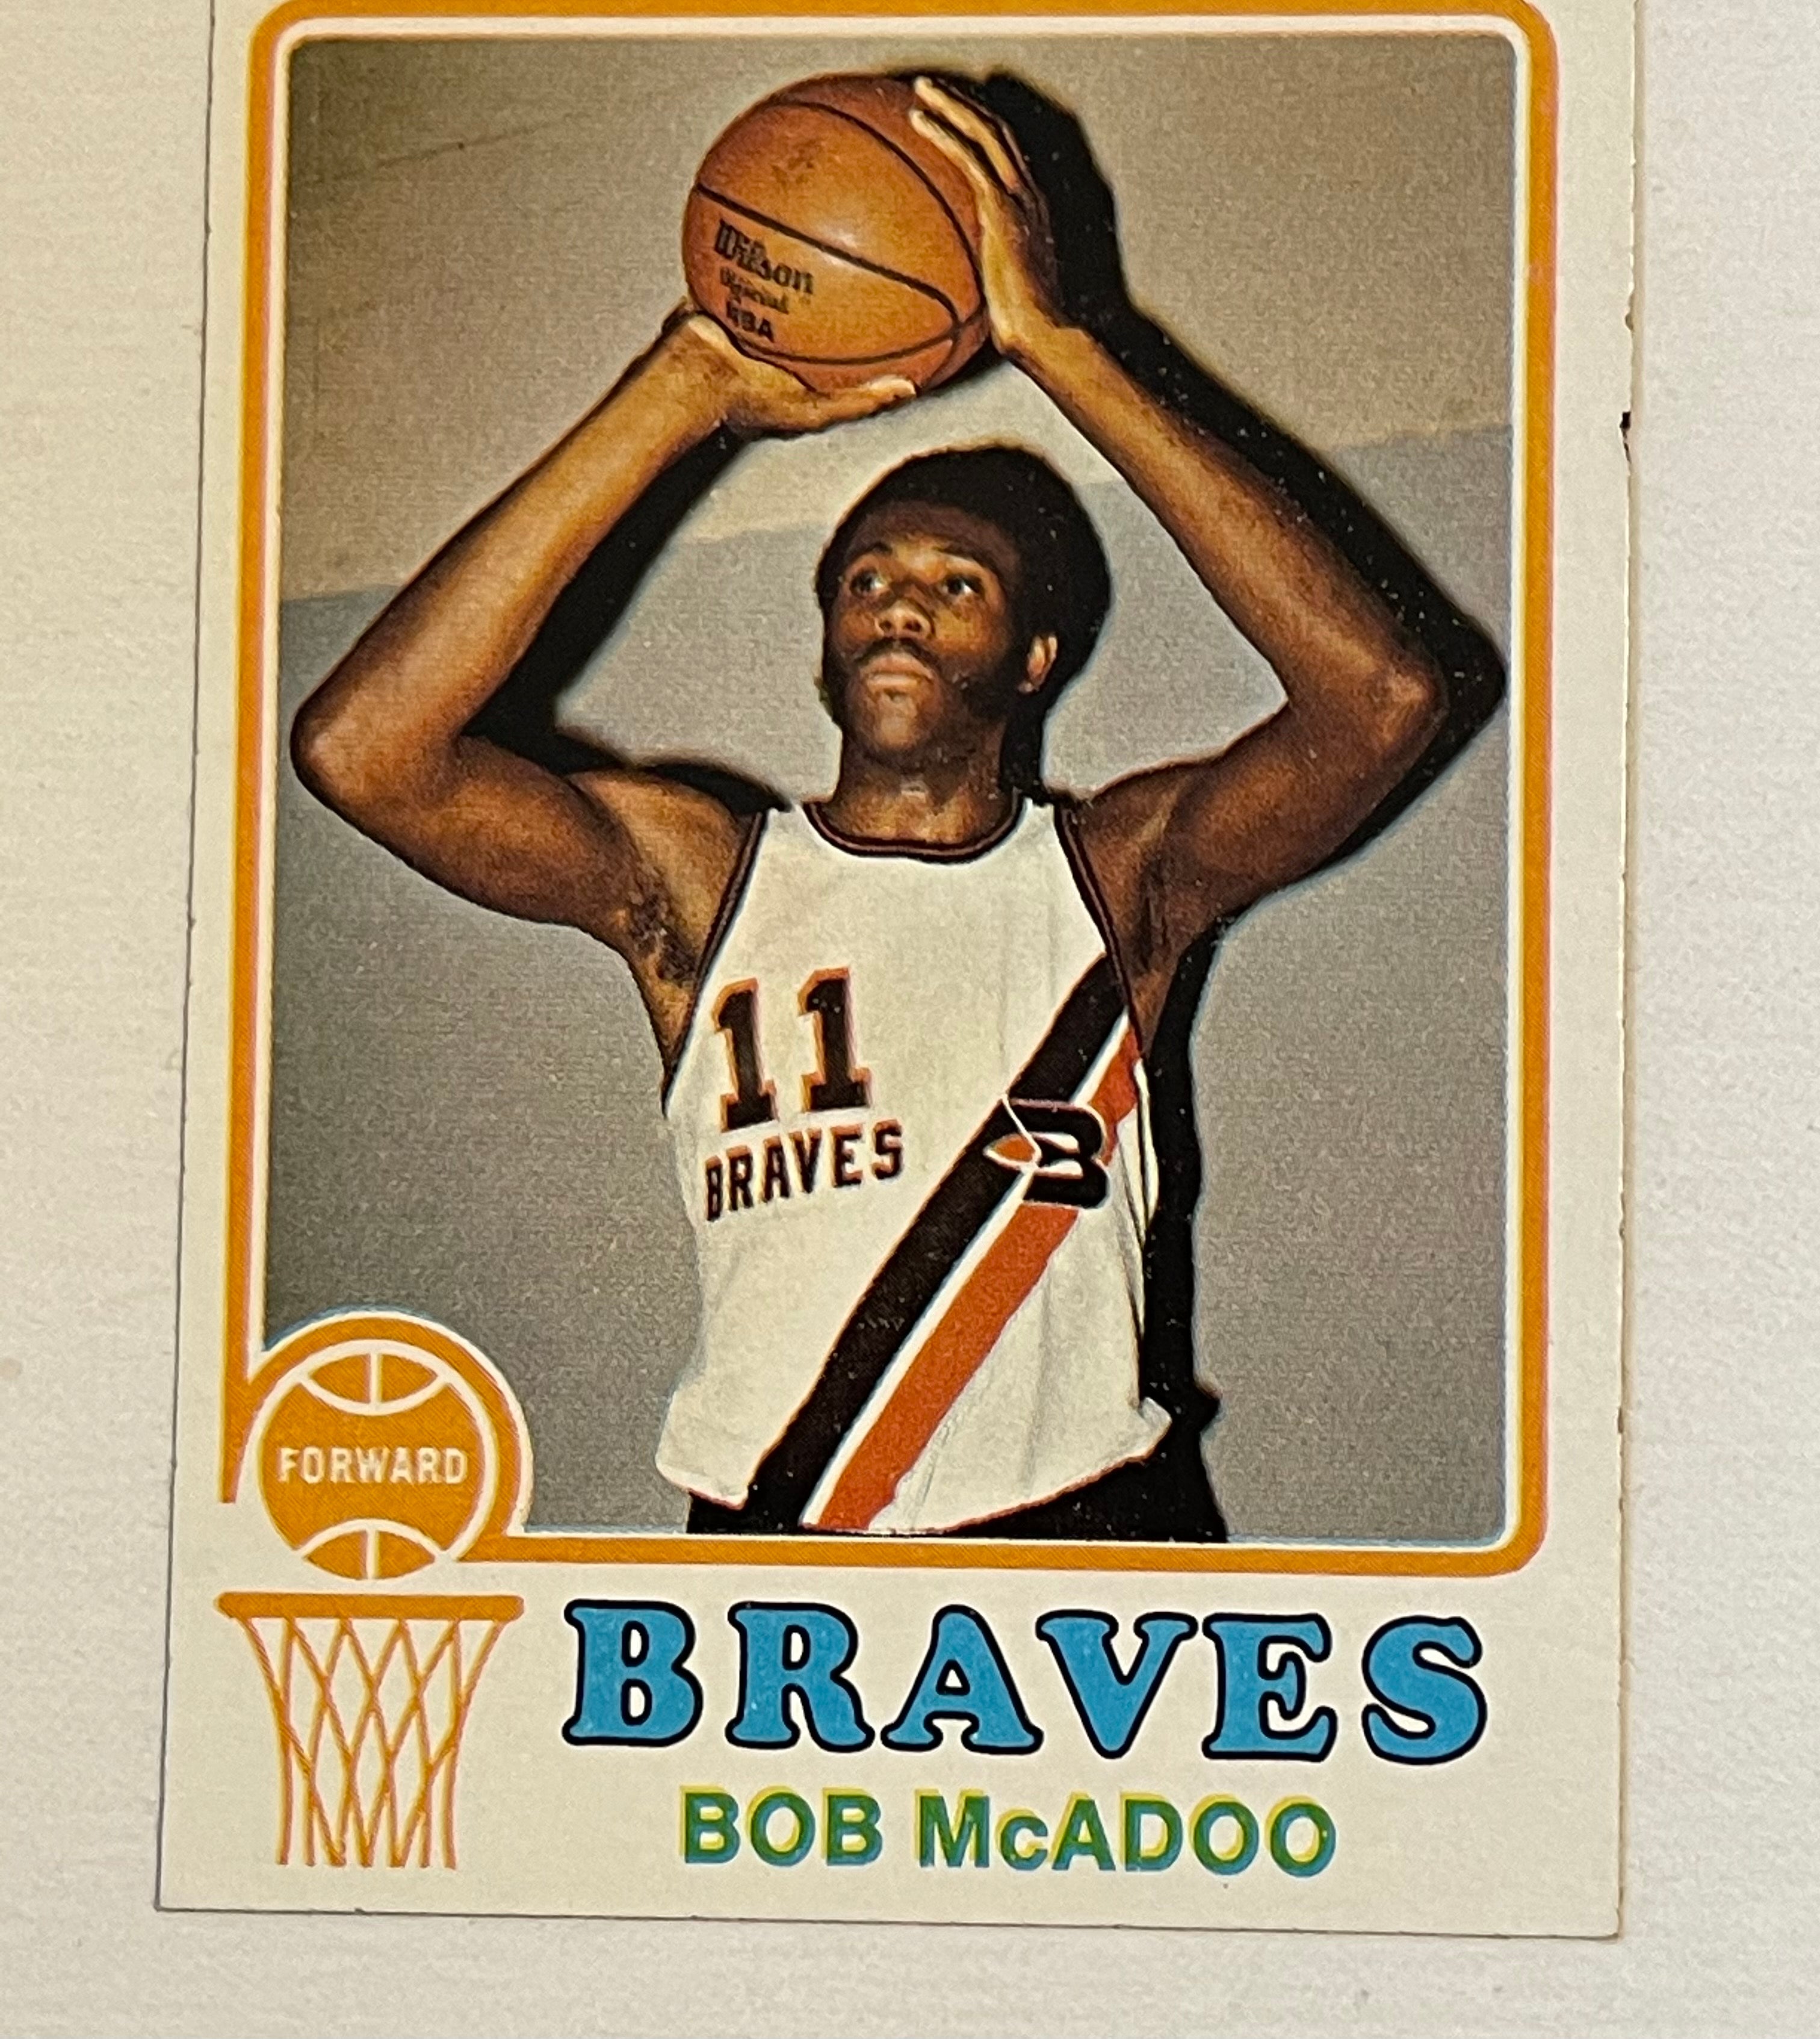 Buffalo Braves basketball Bob McAdoo rookie card 1972/73